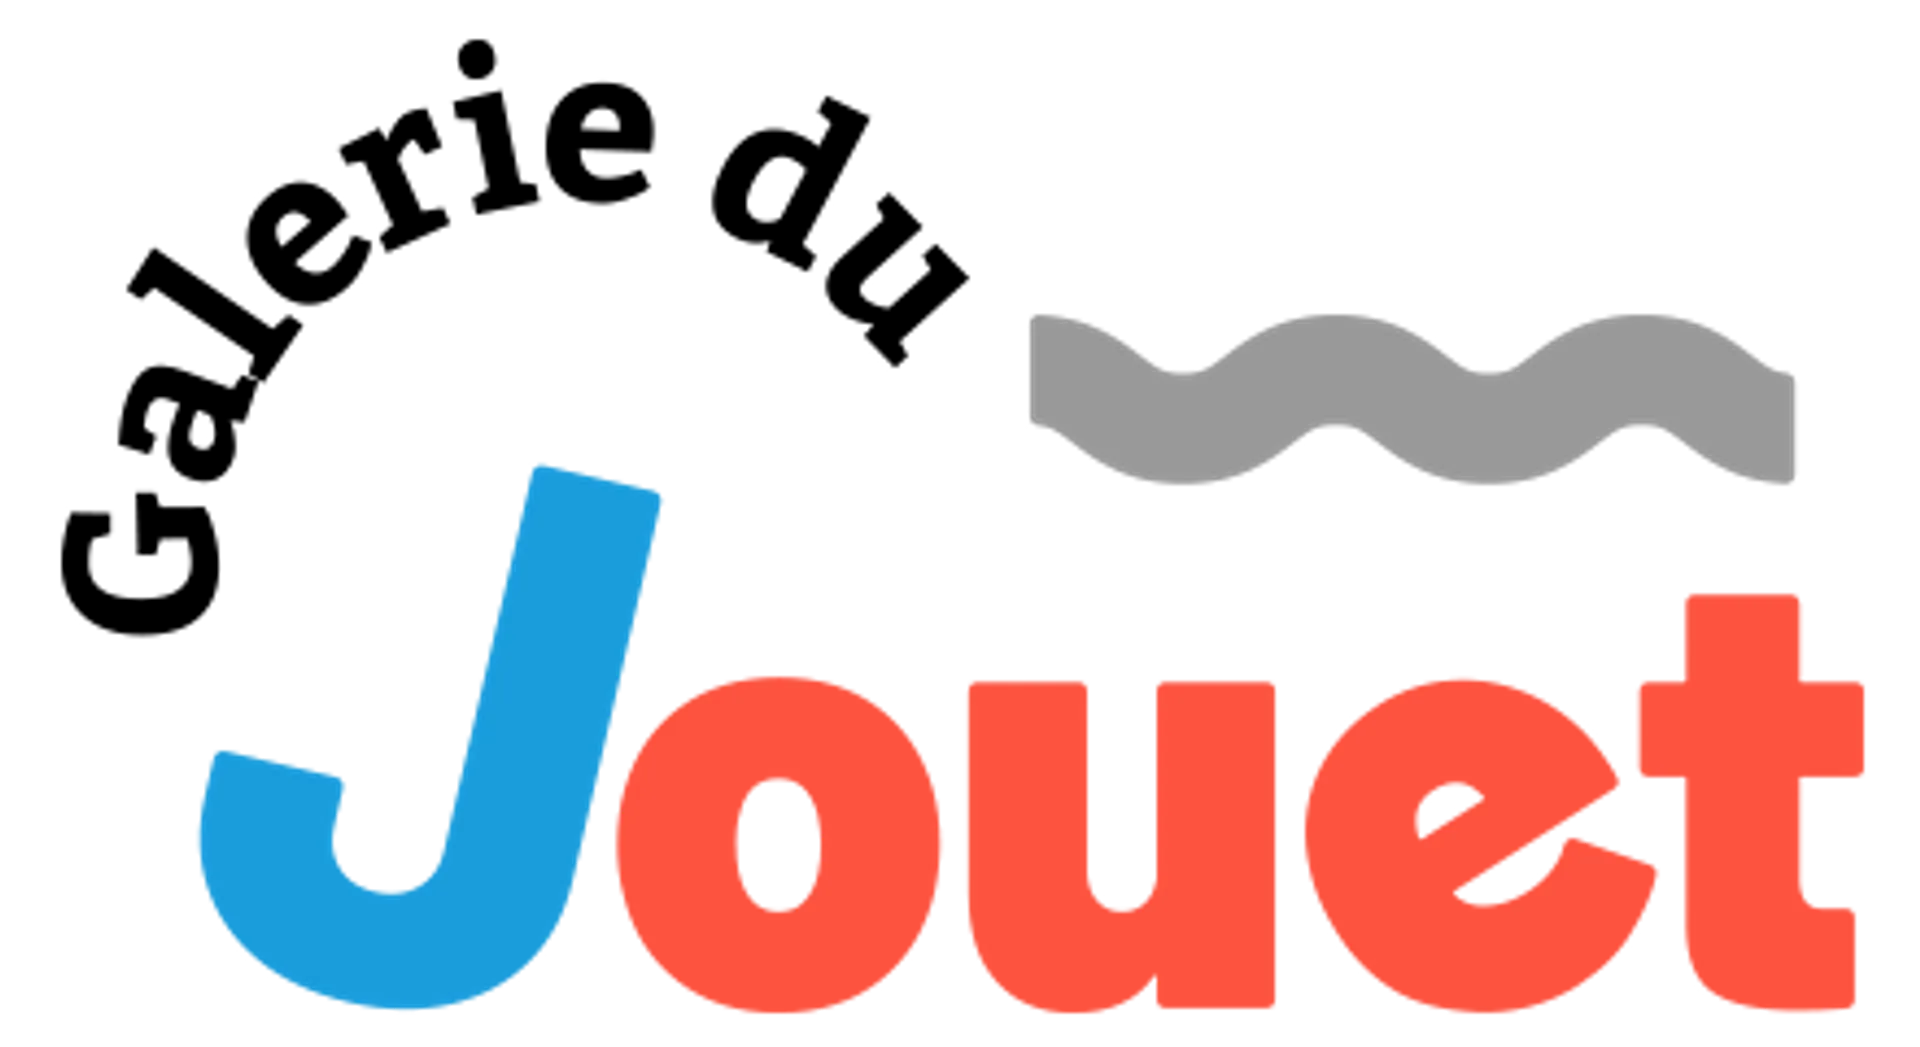 GALERIE DU JOUET logo de circulaires